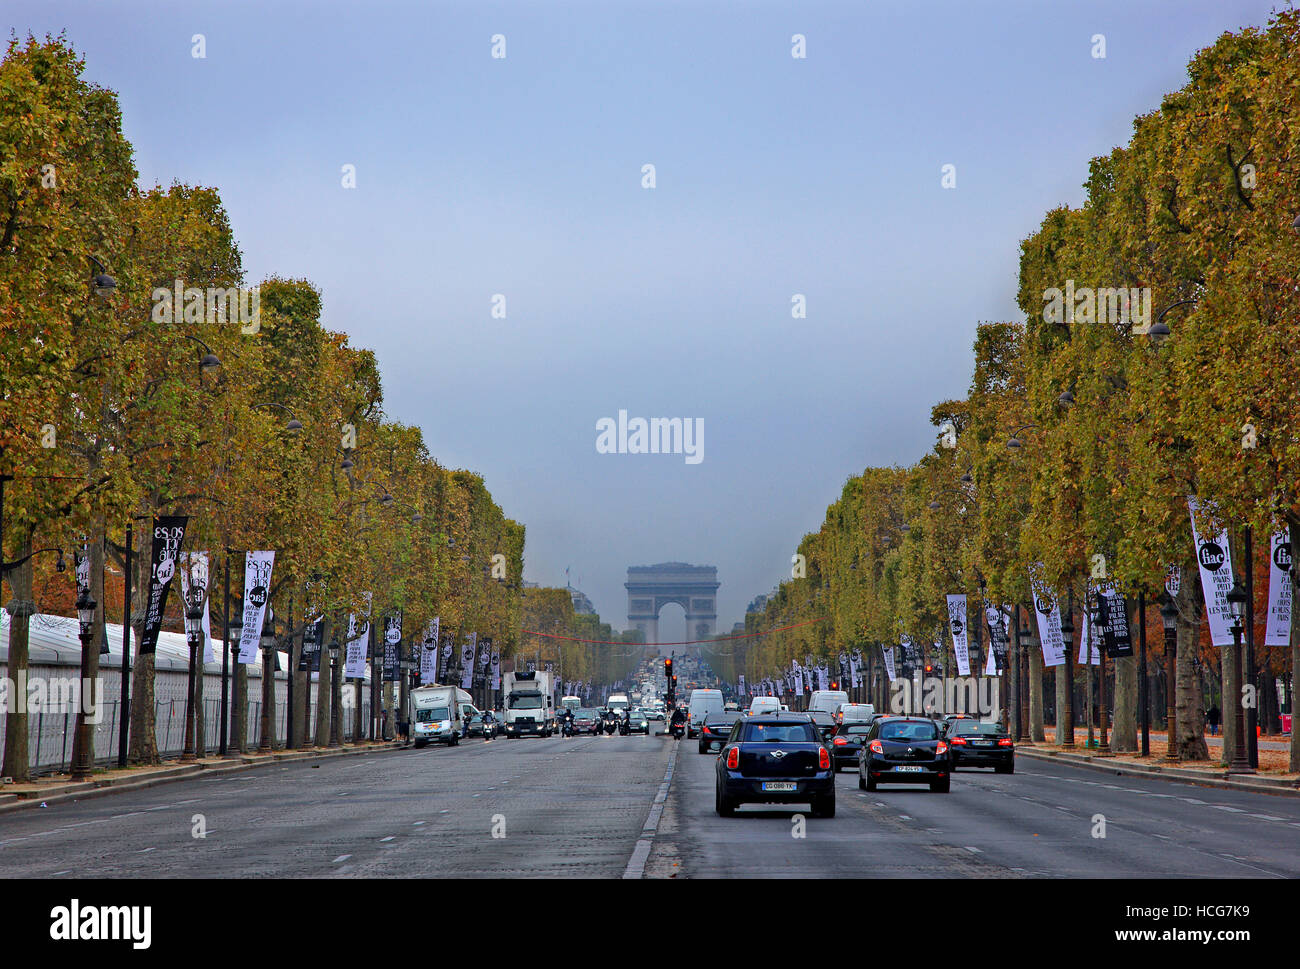 The Champs-Élysées and the Arc de Triomphe (Arch of Triumph) in the background, Paris, France. Stock Photo